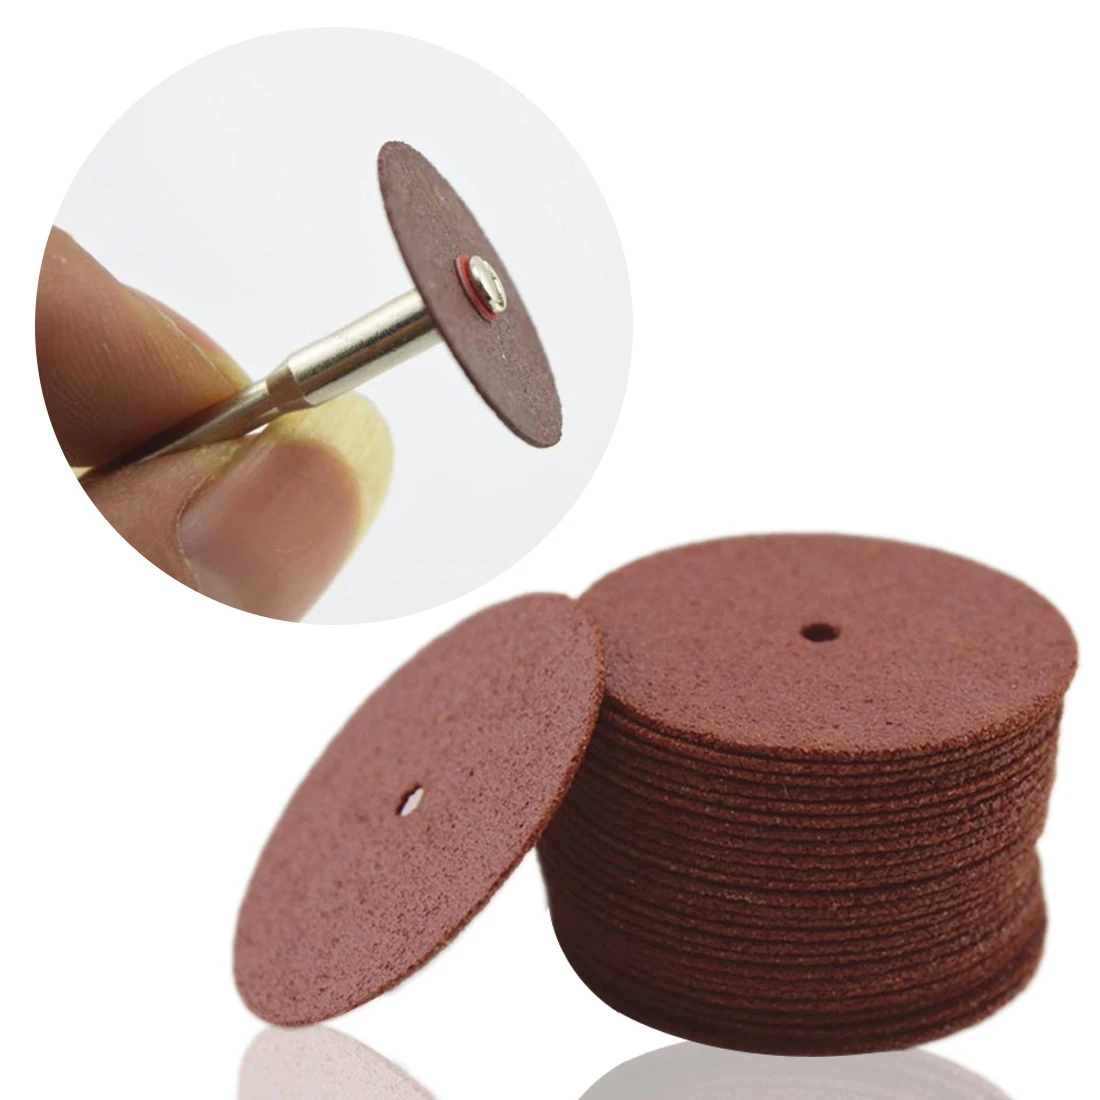 

36pcs dremel accessories 24mm Abrasive Disc Cutting Discs Reinforced Cut Off Grinding Wheels Rotary Blade Cuttter Tools